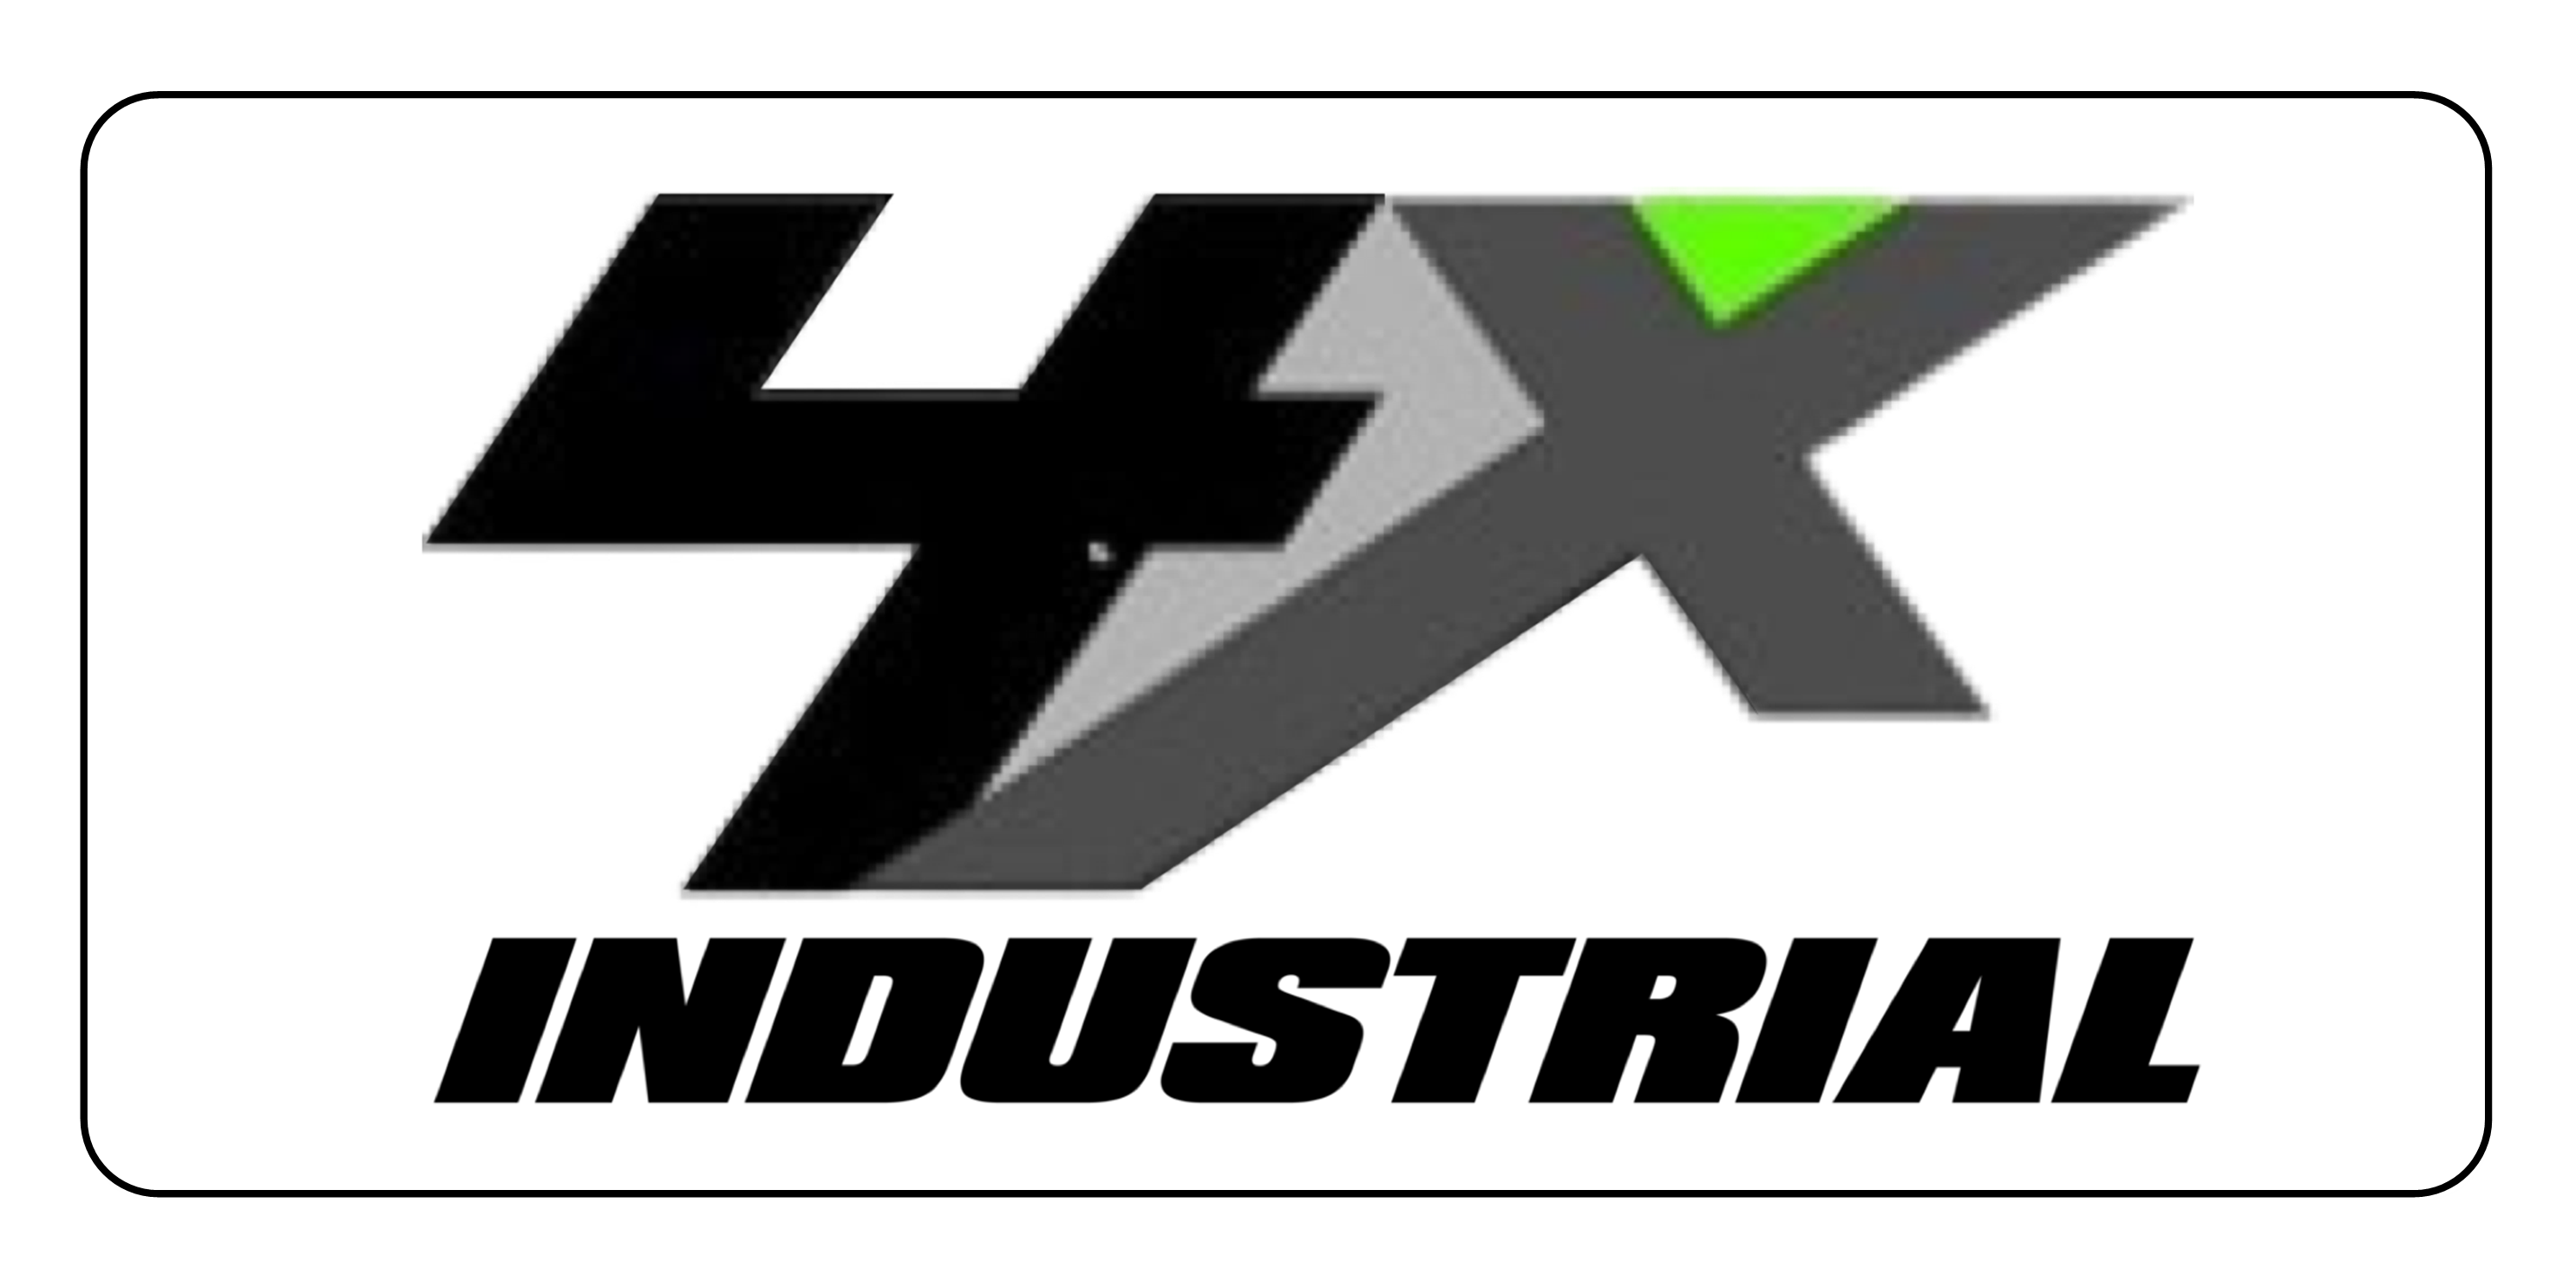 4X Industrial